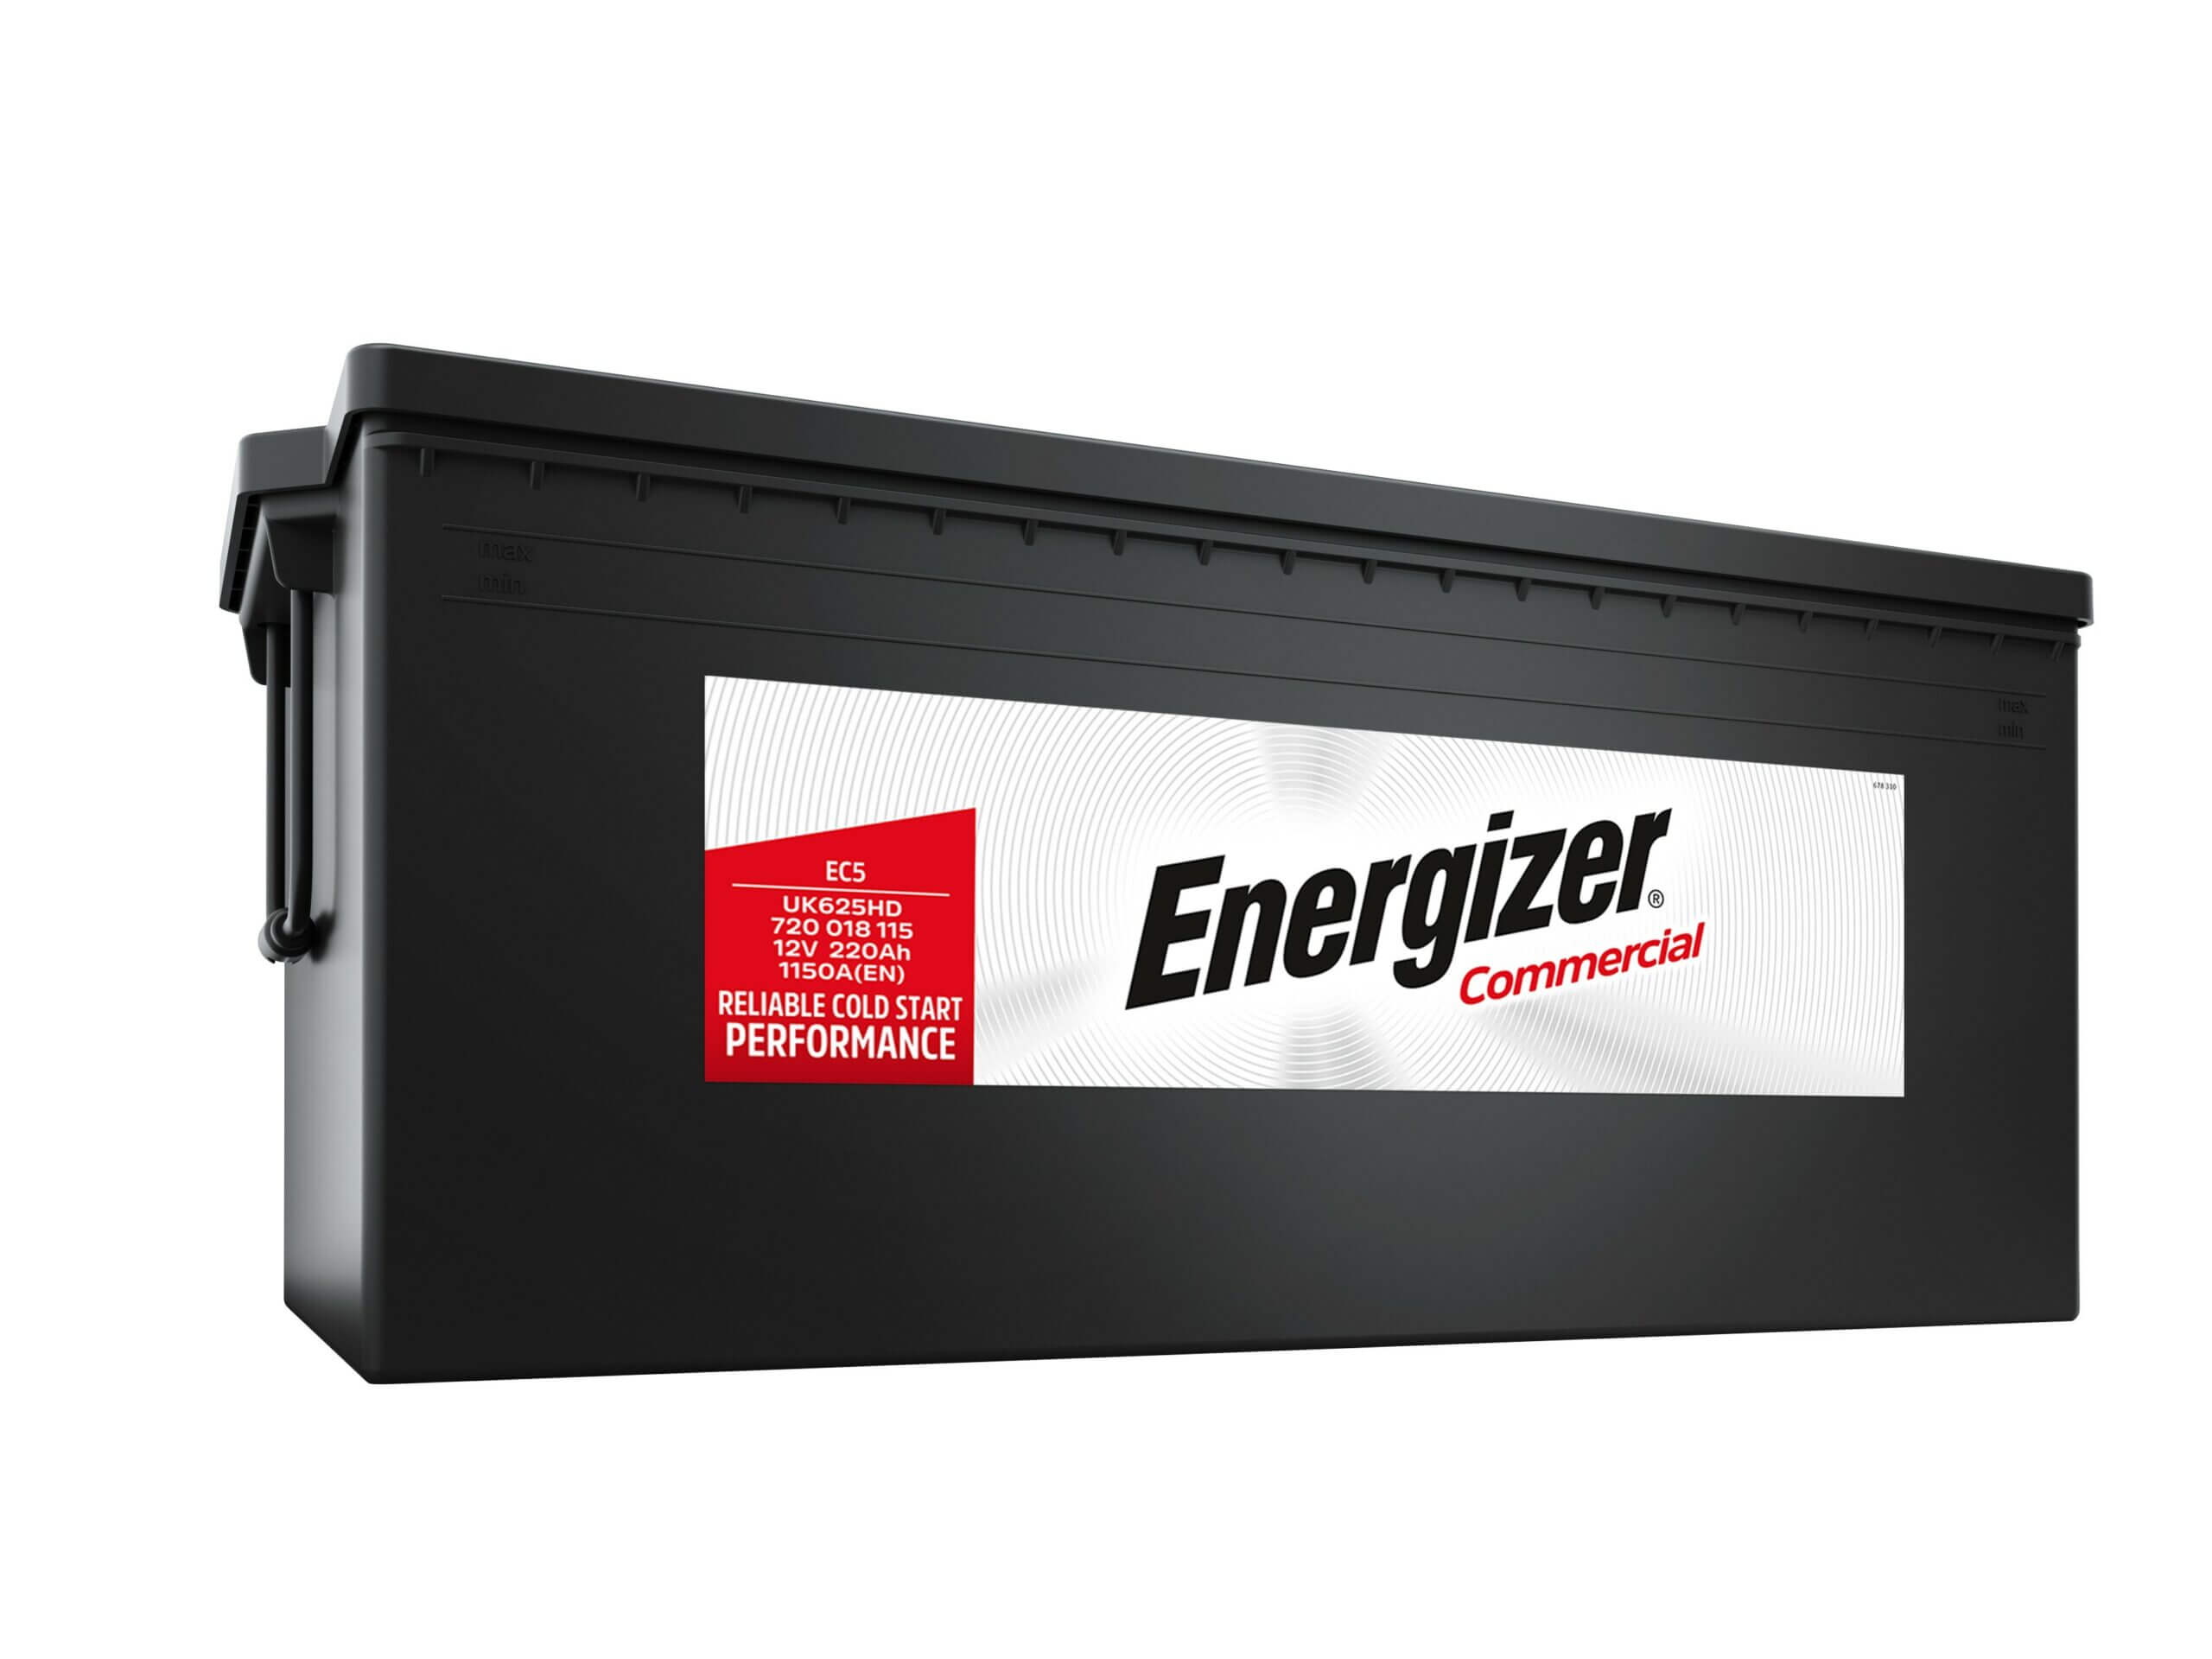 Energizer truck